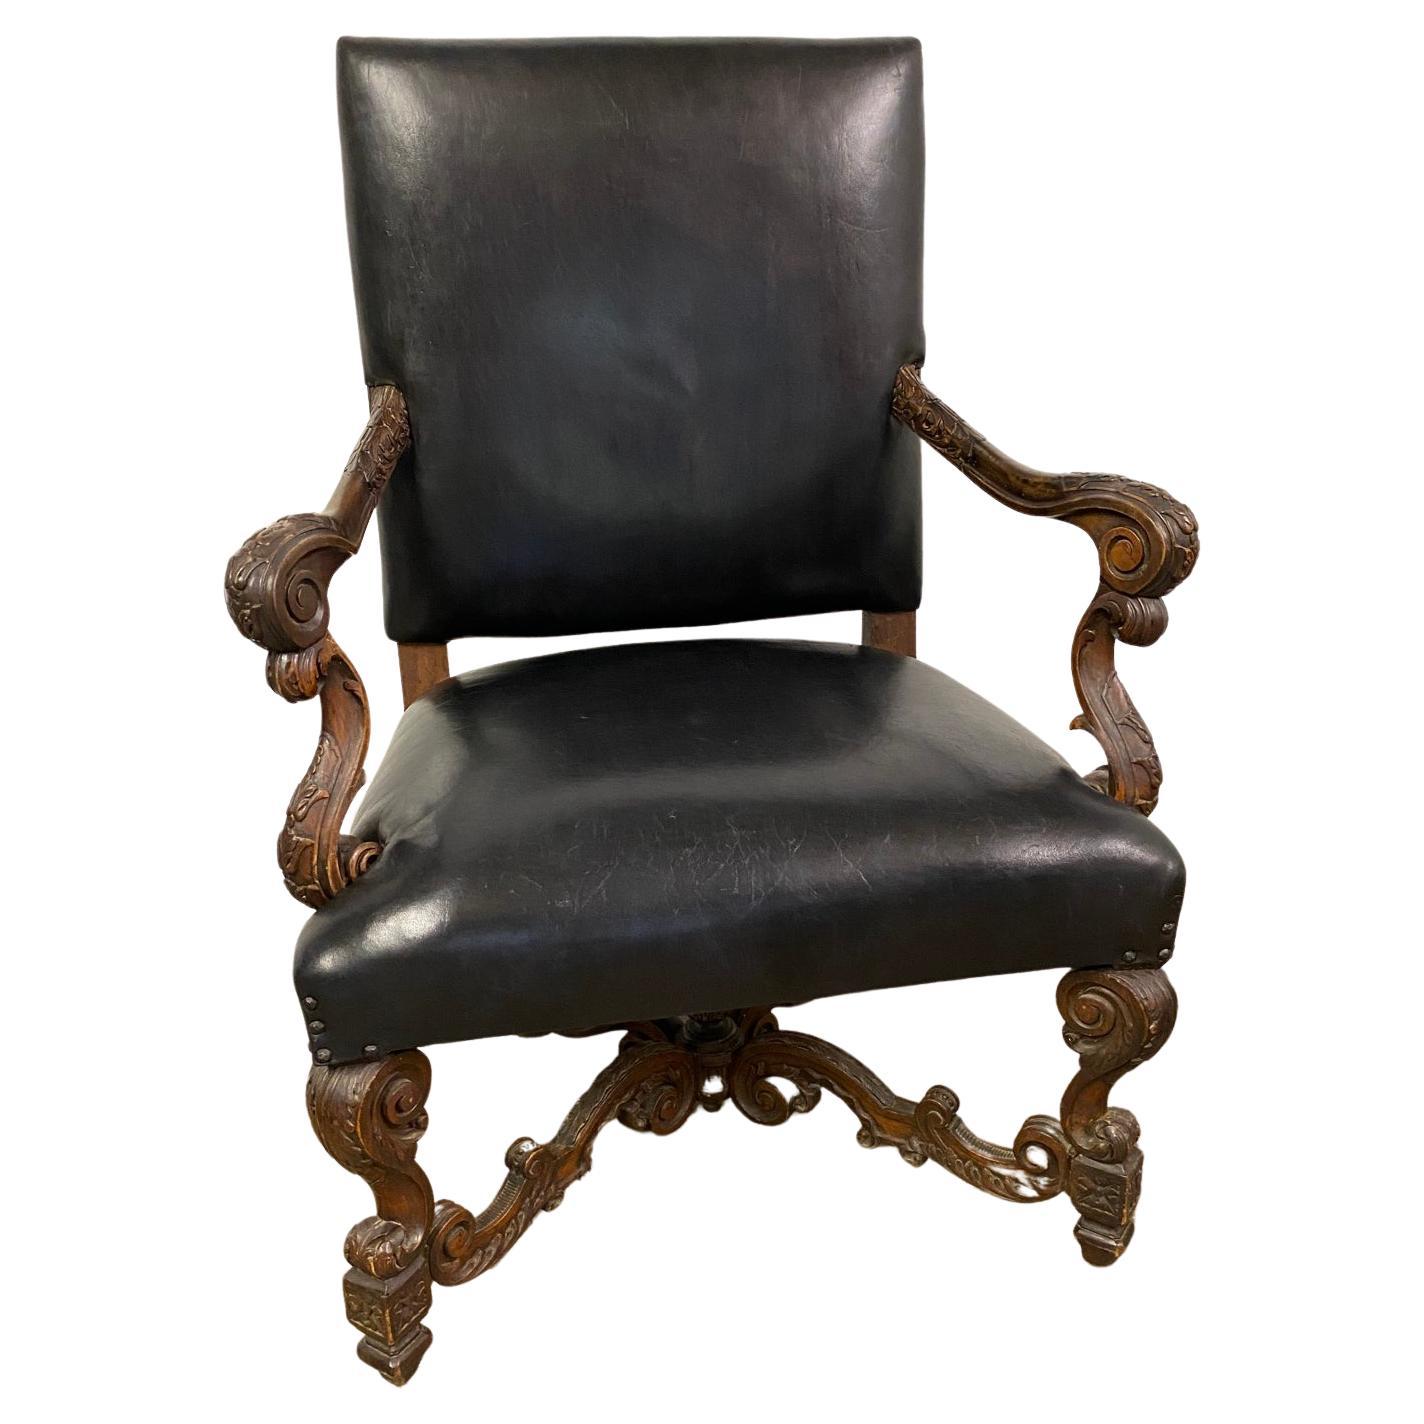 19th Century Italian Baroque Carved Walnut Throne Chair